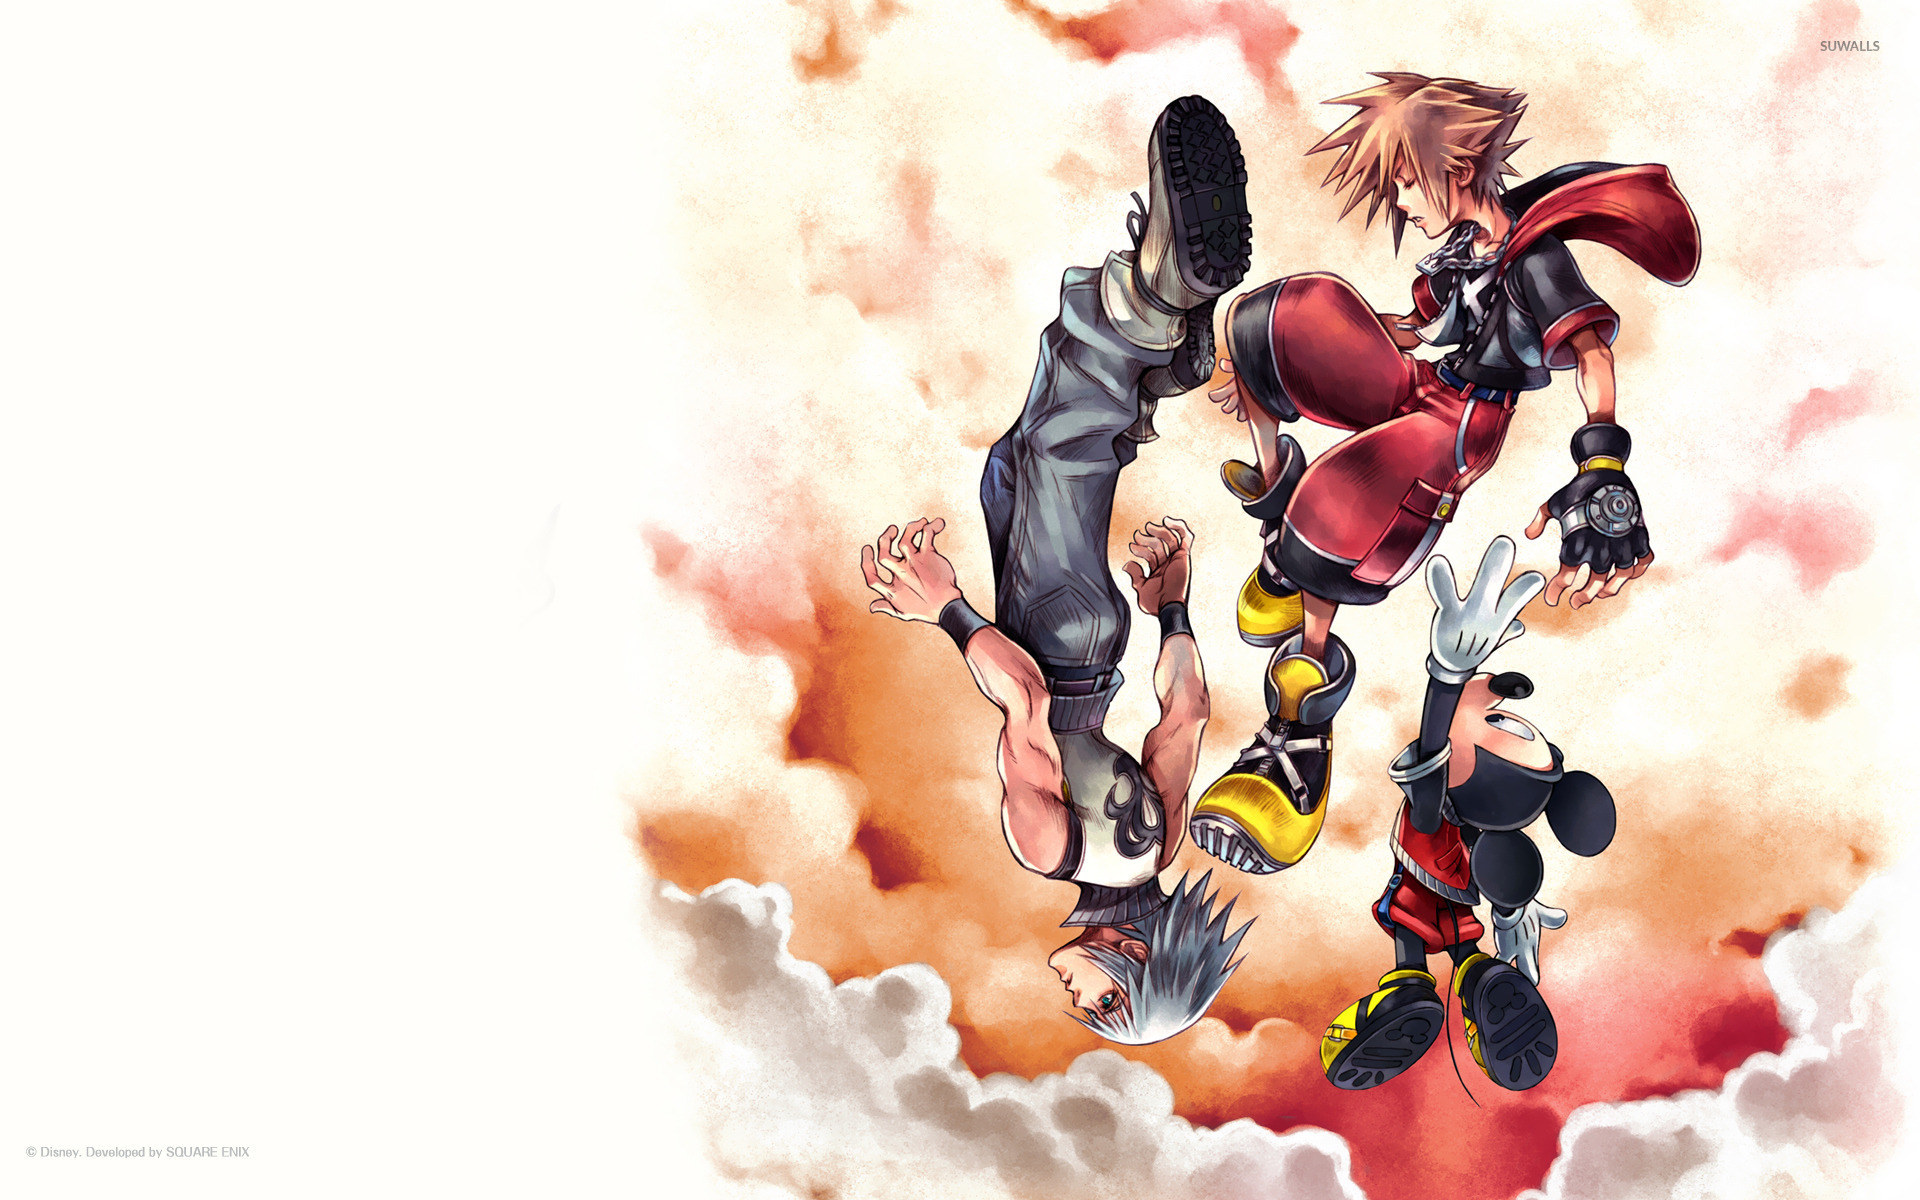 Kingdom Hearts Iii Game Art Wallpapers